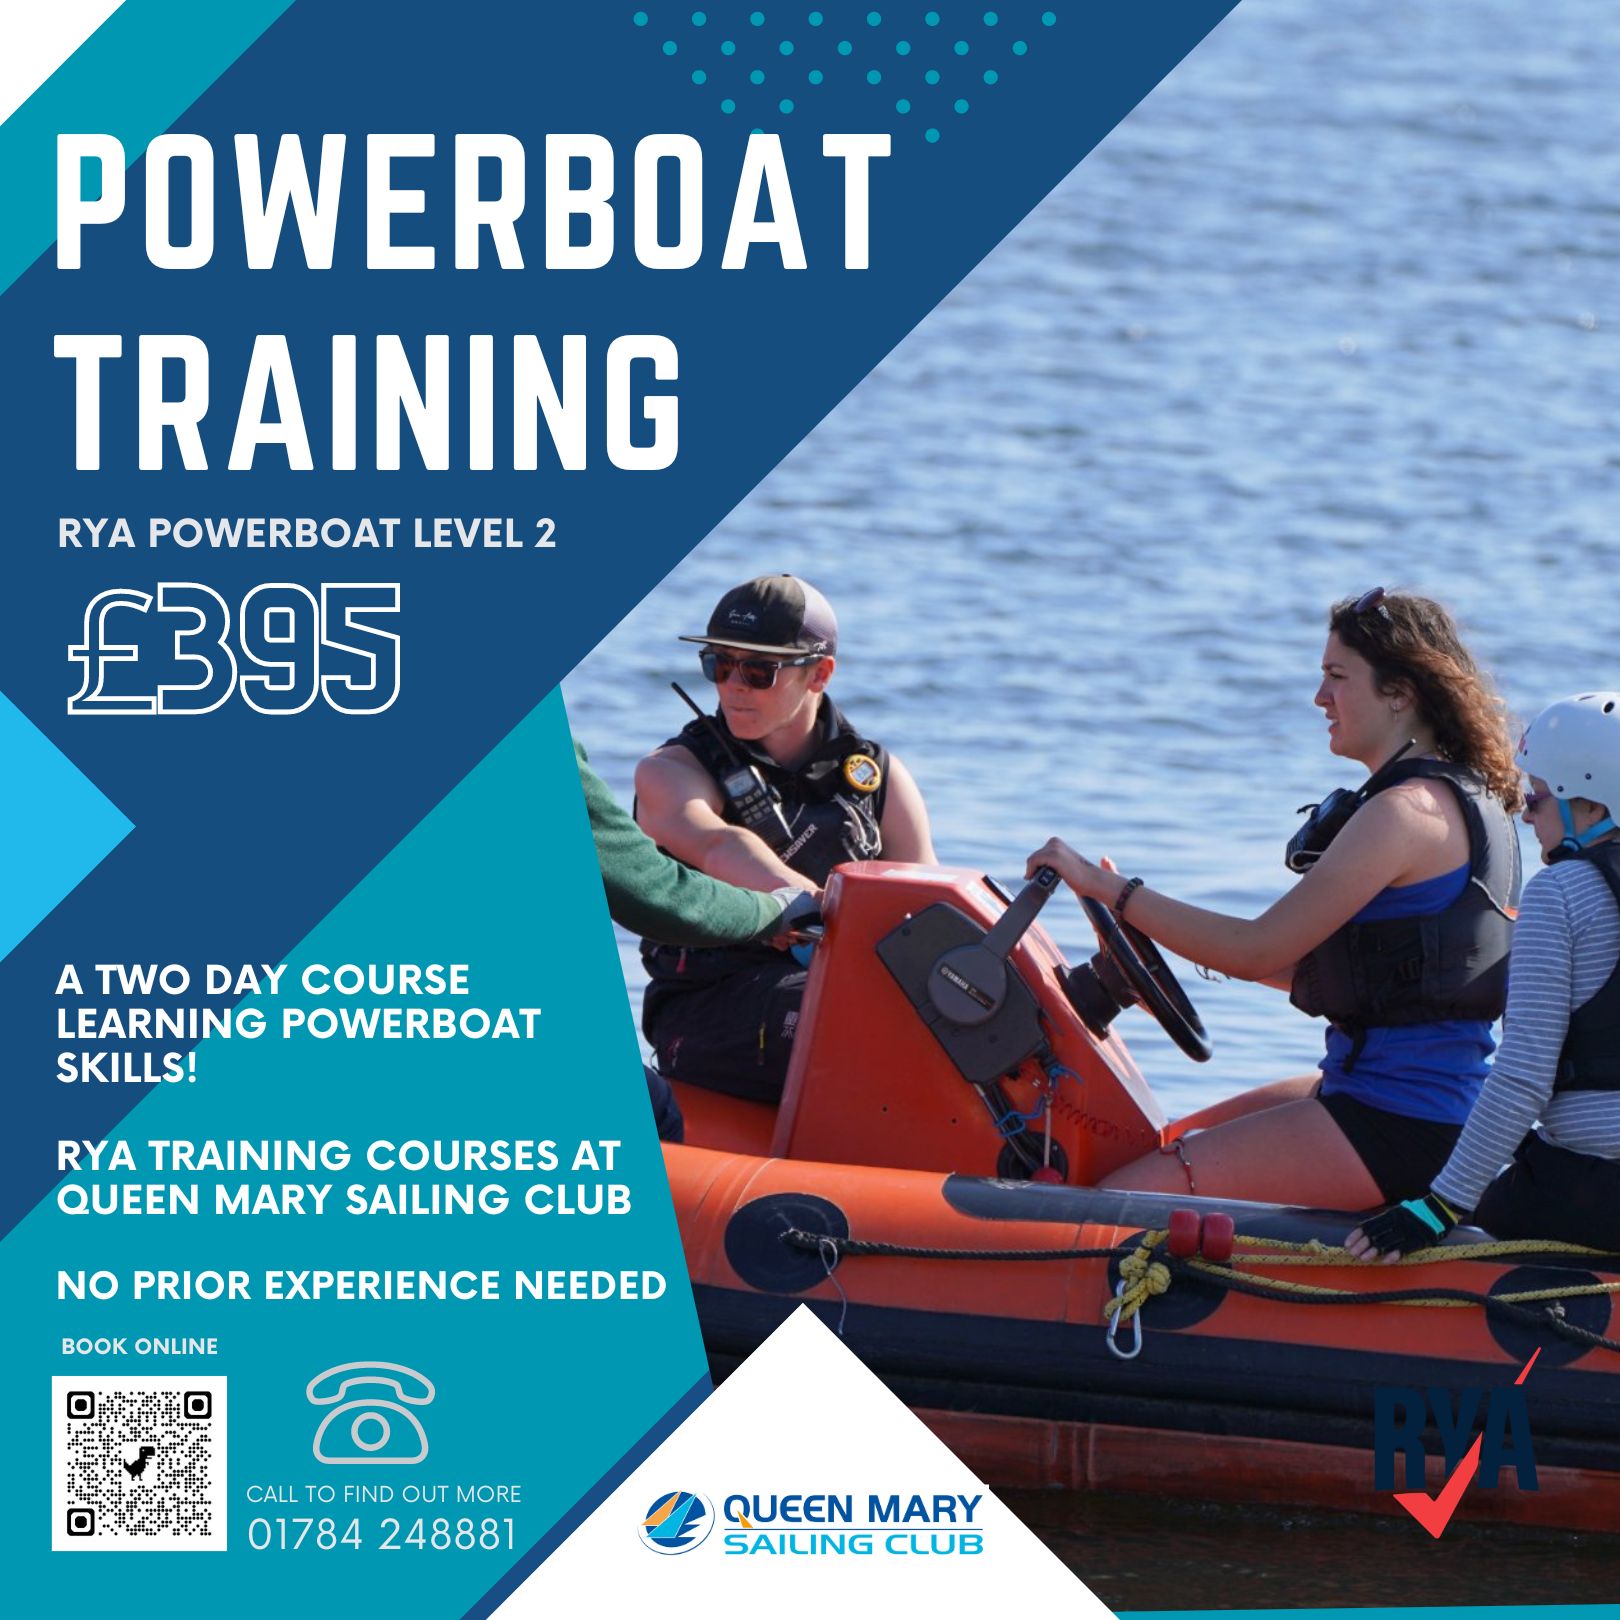 RYA Powerboat Leve 2 Training Course